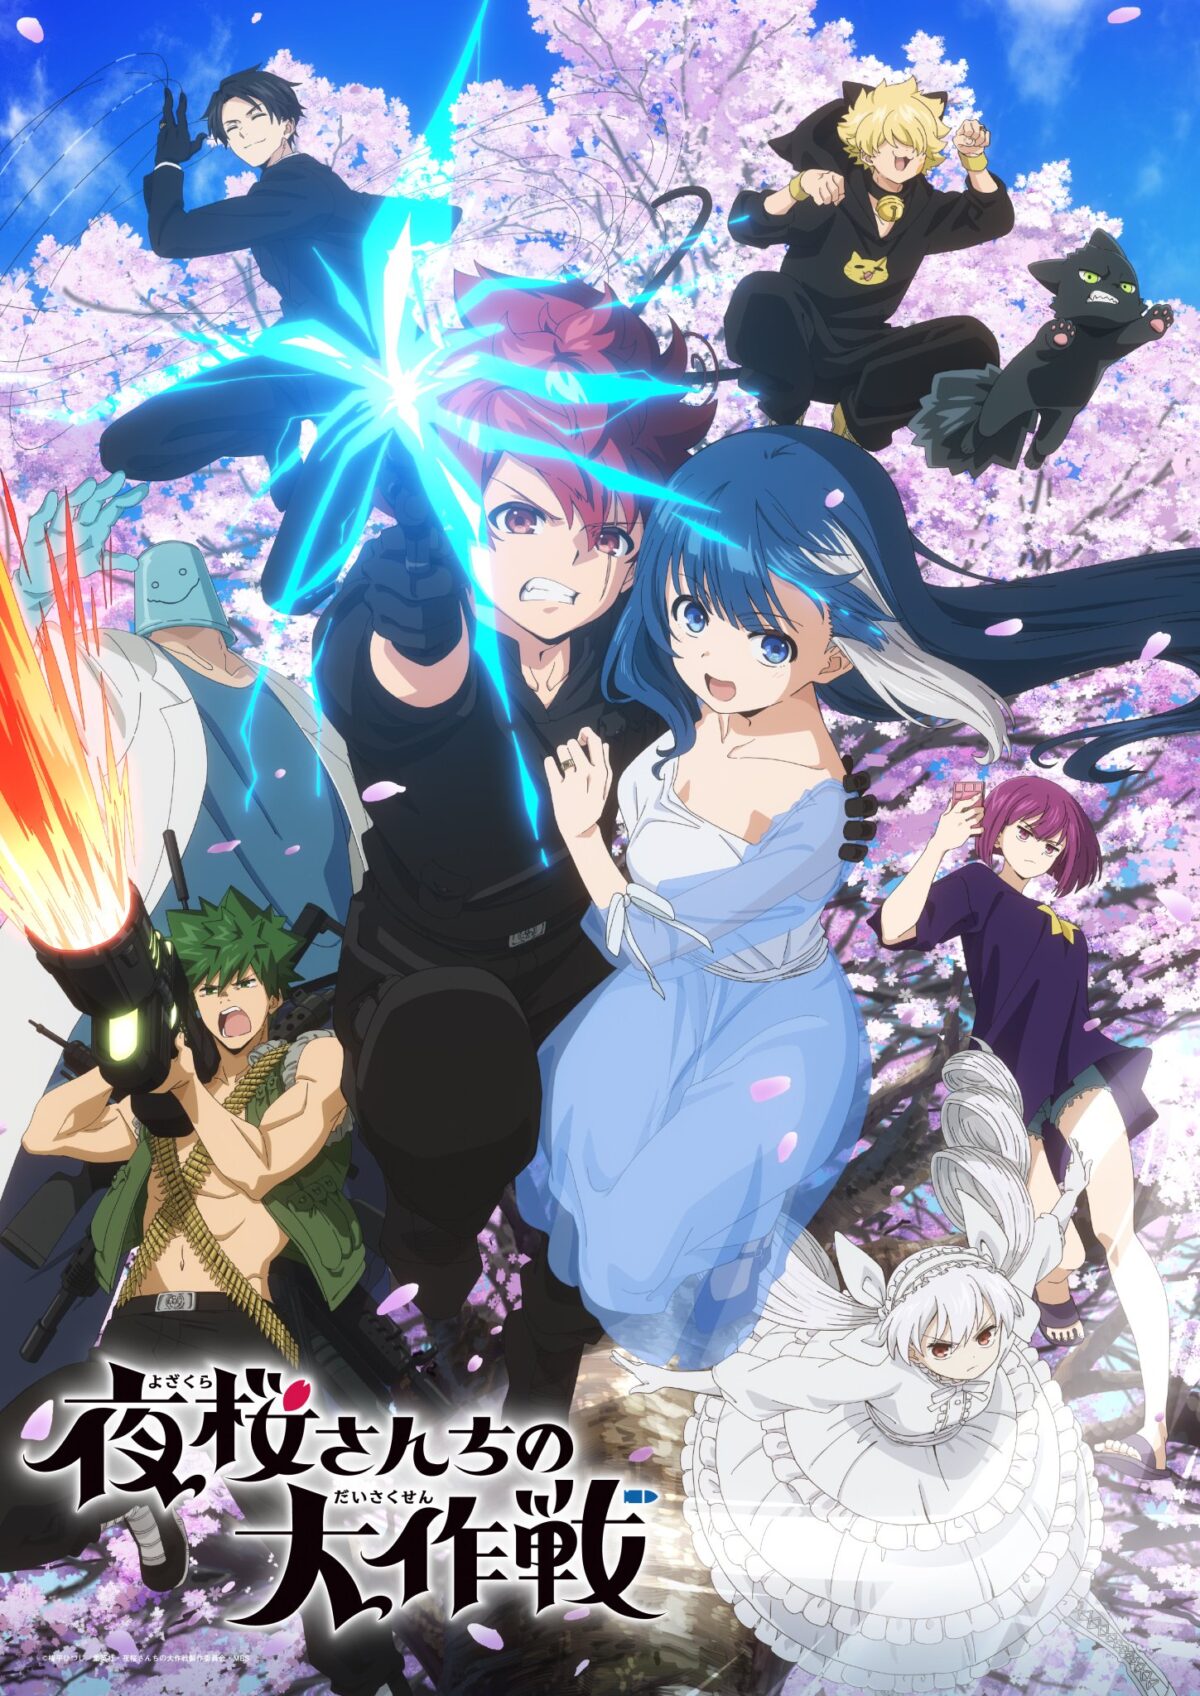 Shueisha Reveals a Chaotic New Visual for ‘Mission: Yozakura Family’ Anime